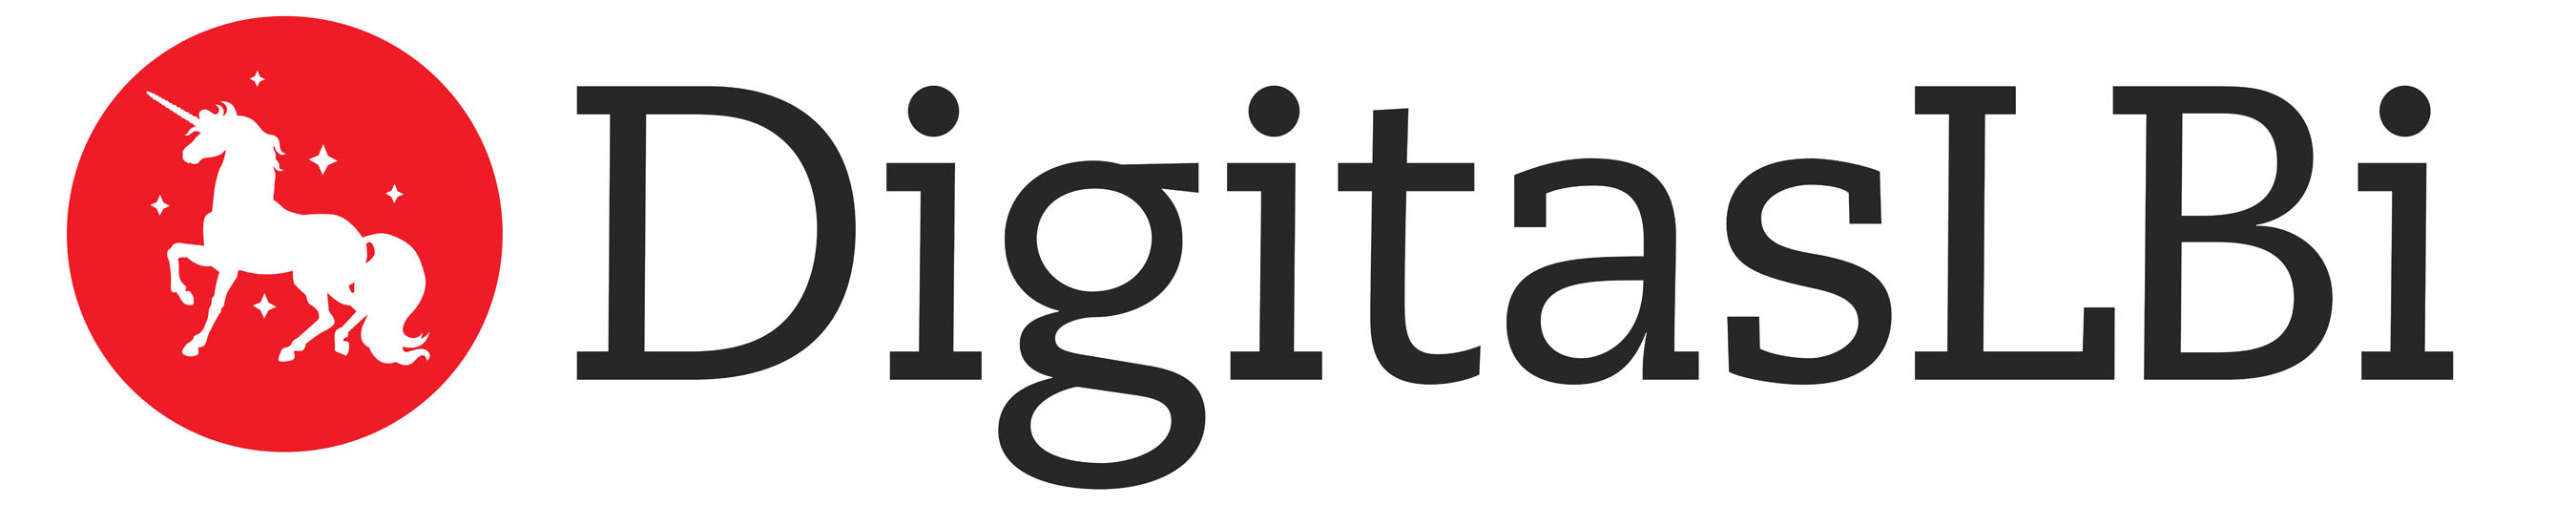 DigitasLBi Logo. (PRNewsFoto/DigitasLBi) (PRNewsFoto/)